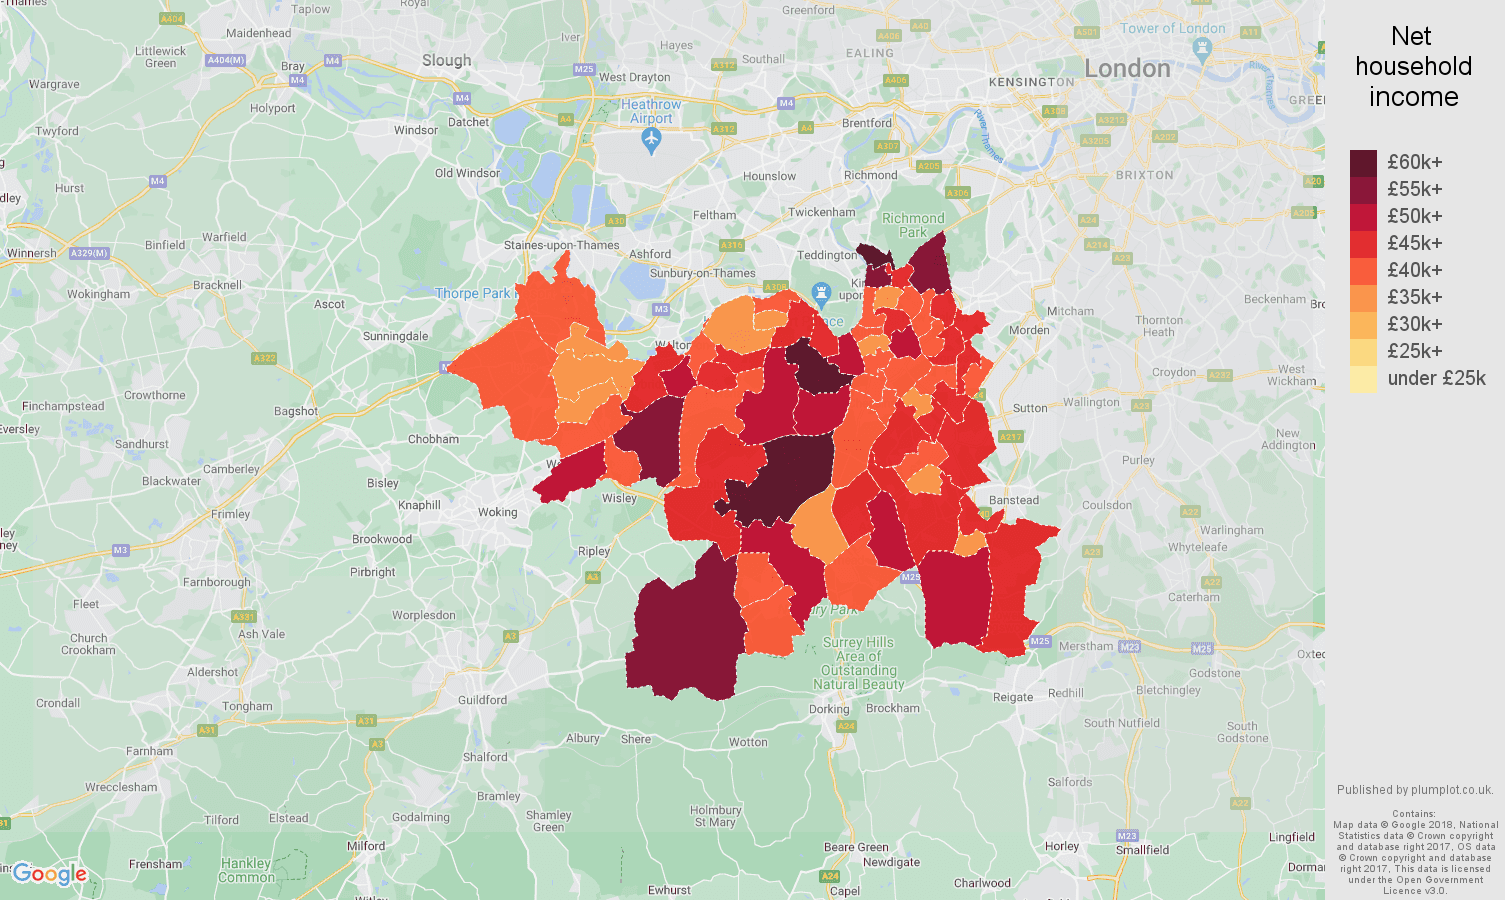 Kingston upon Thames net household income map